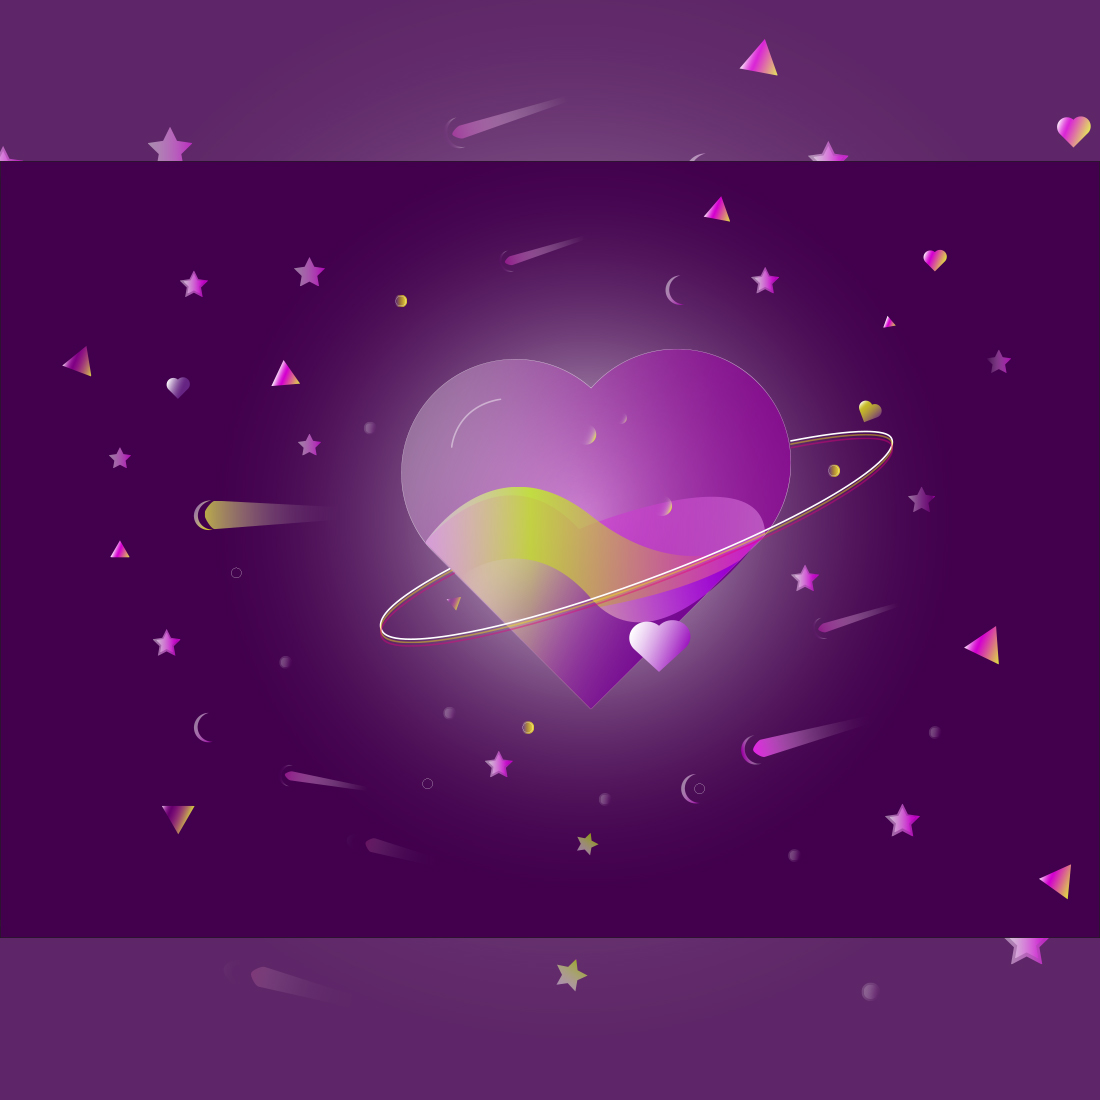 Purple Love Space Vector Illustration main cover.